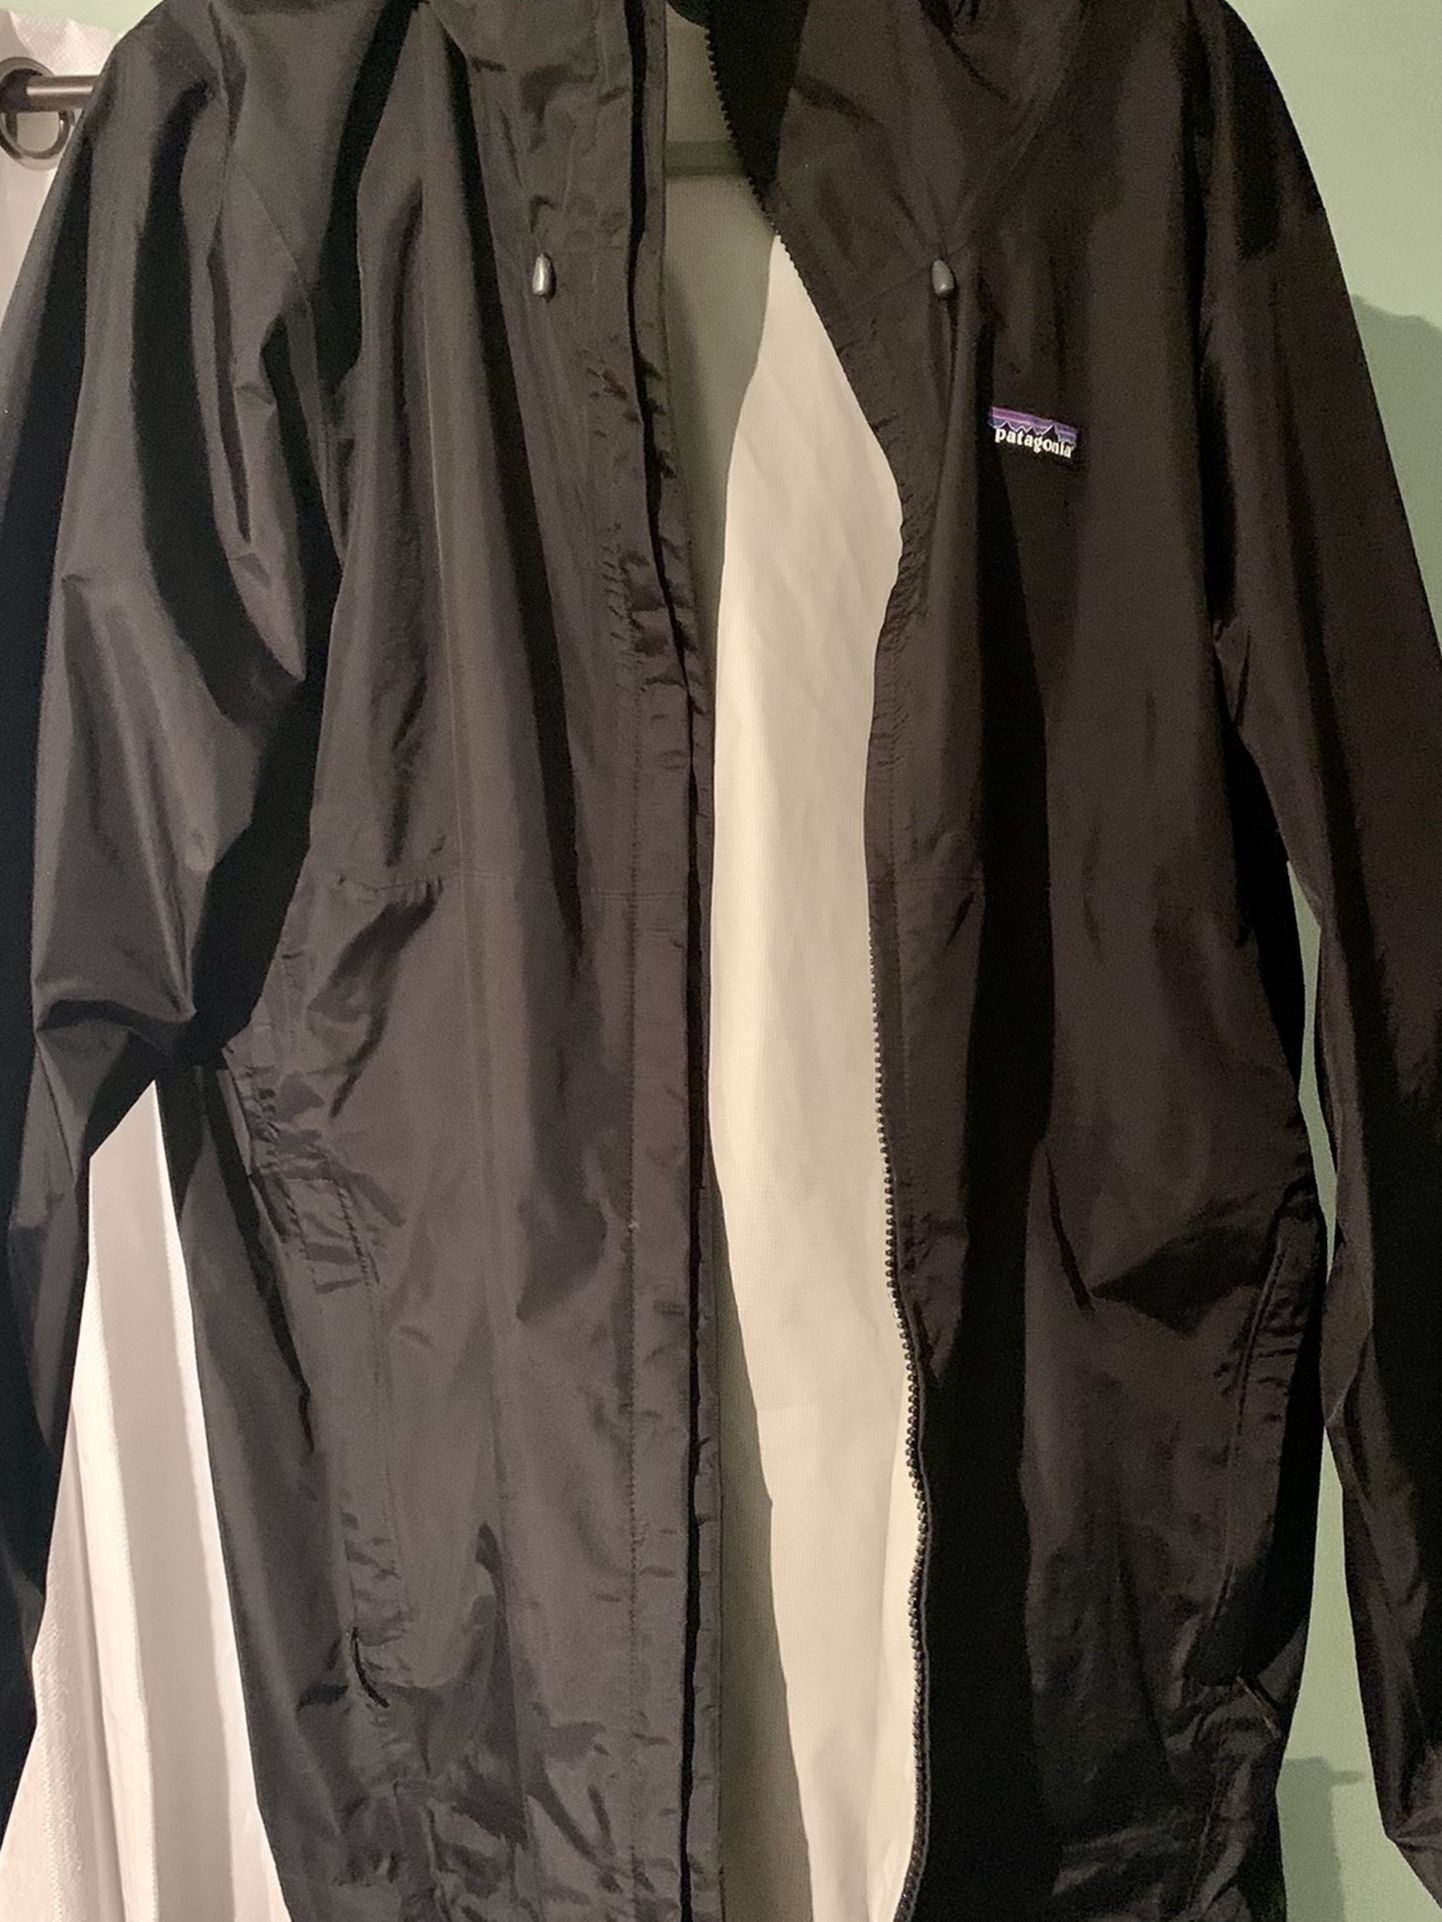 Patagonia Rain jacket men’s XL (barely used)